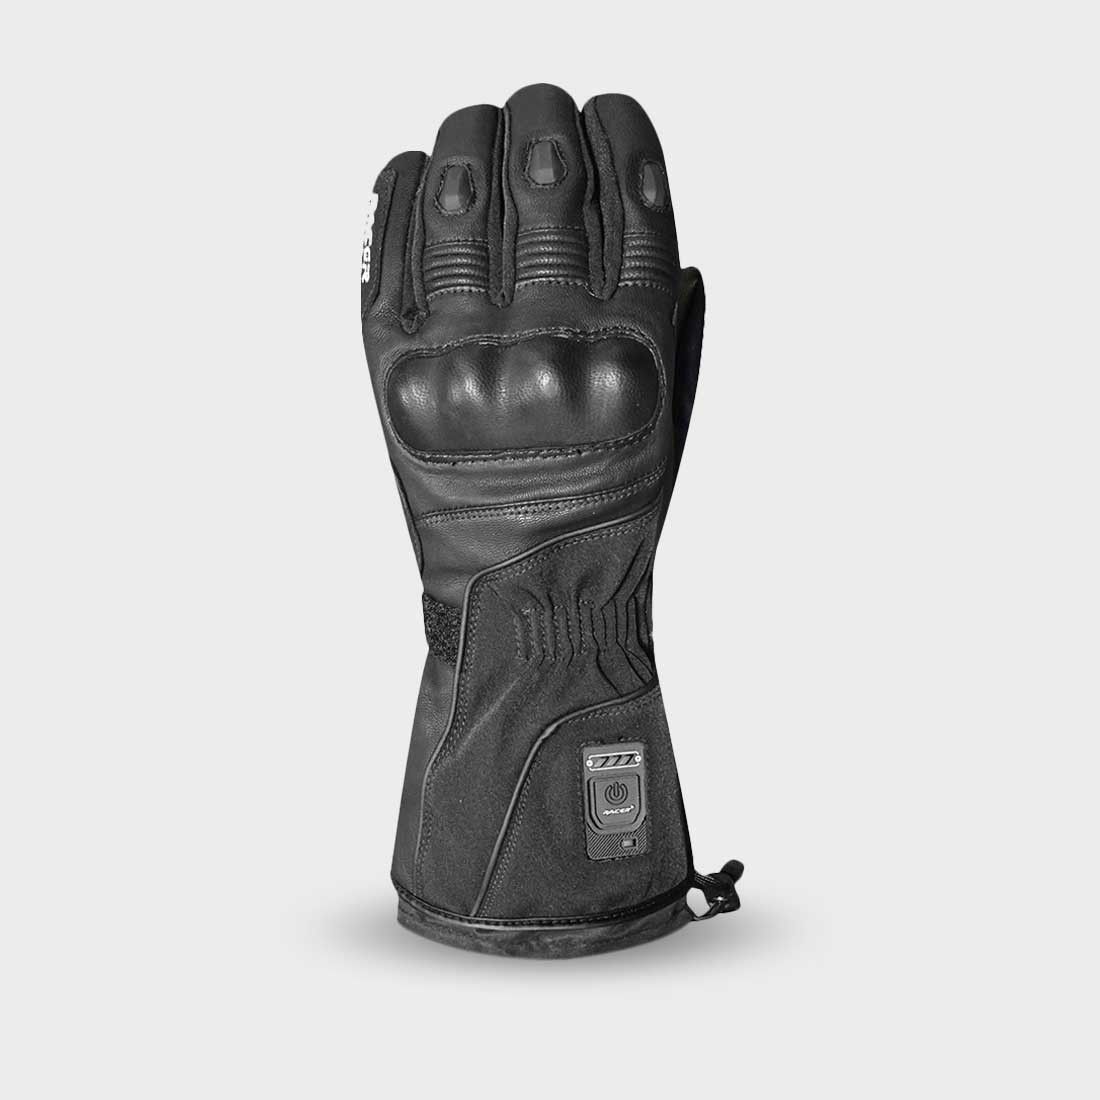 RACER Heat 3 - Heating Gloves